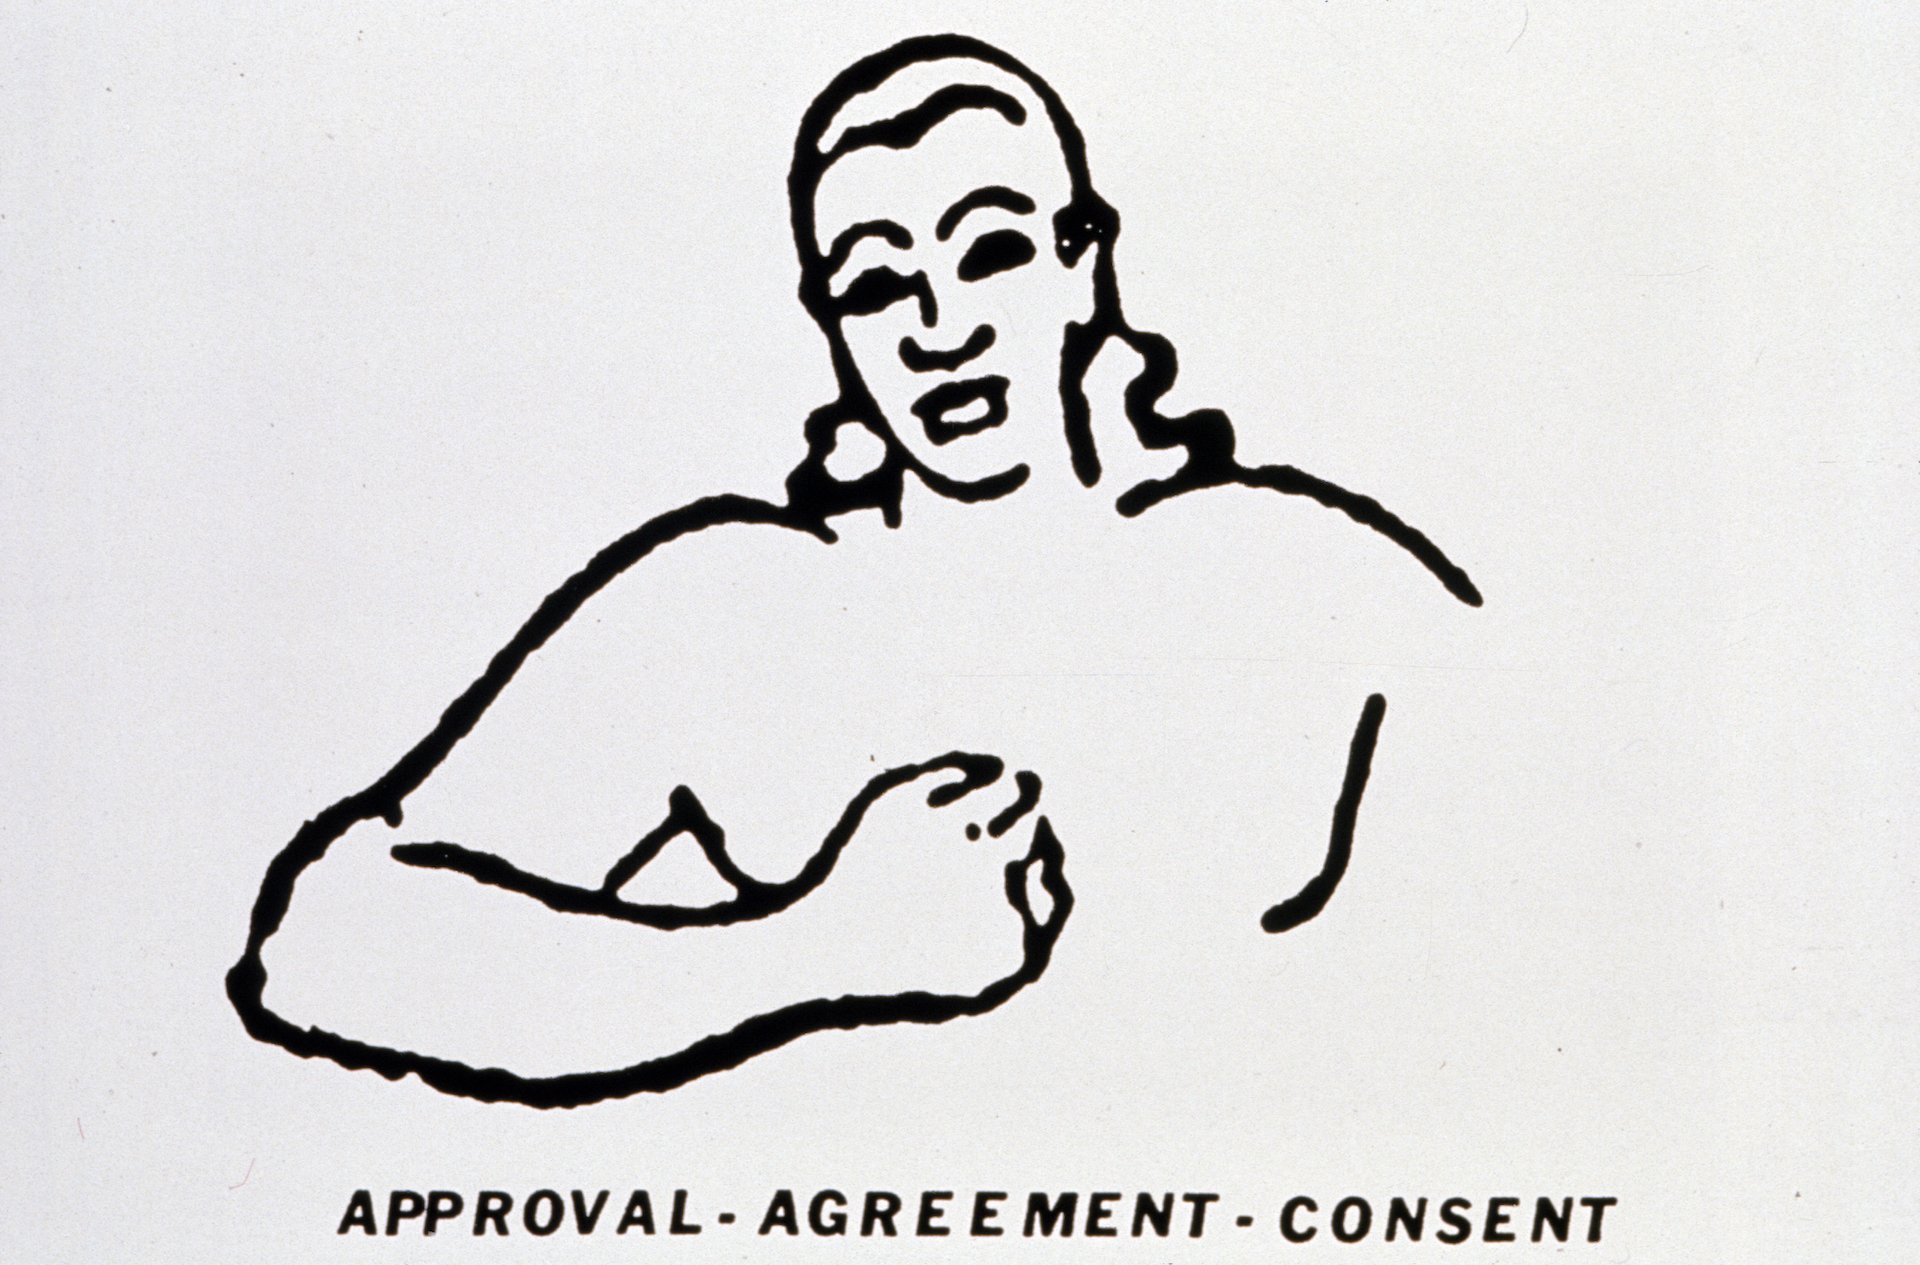 Approval Agreement Consent SR_SLIDE853 copy.jpg